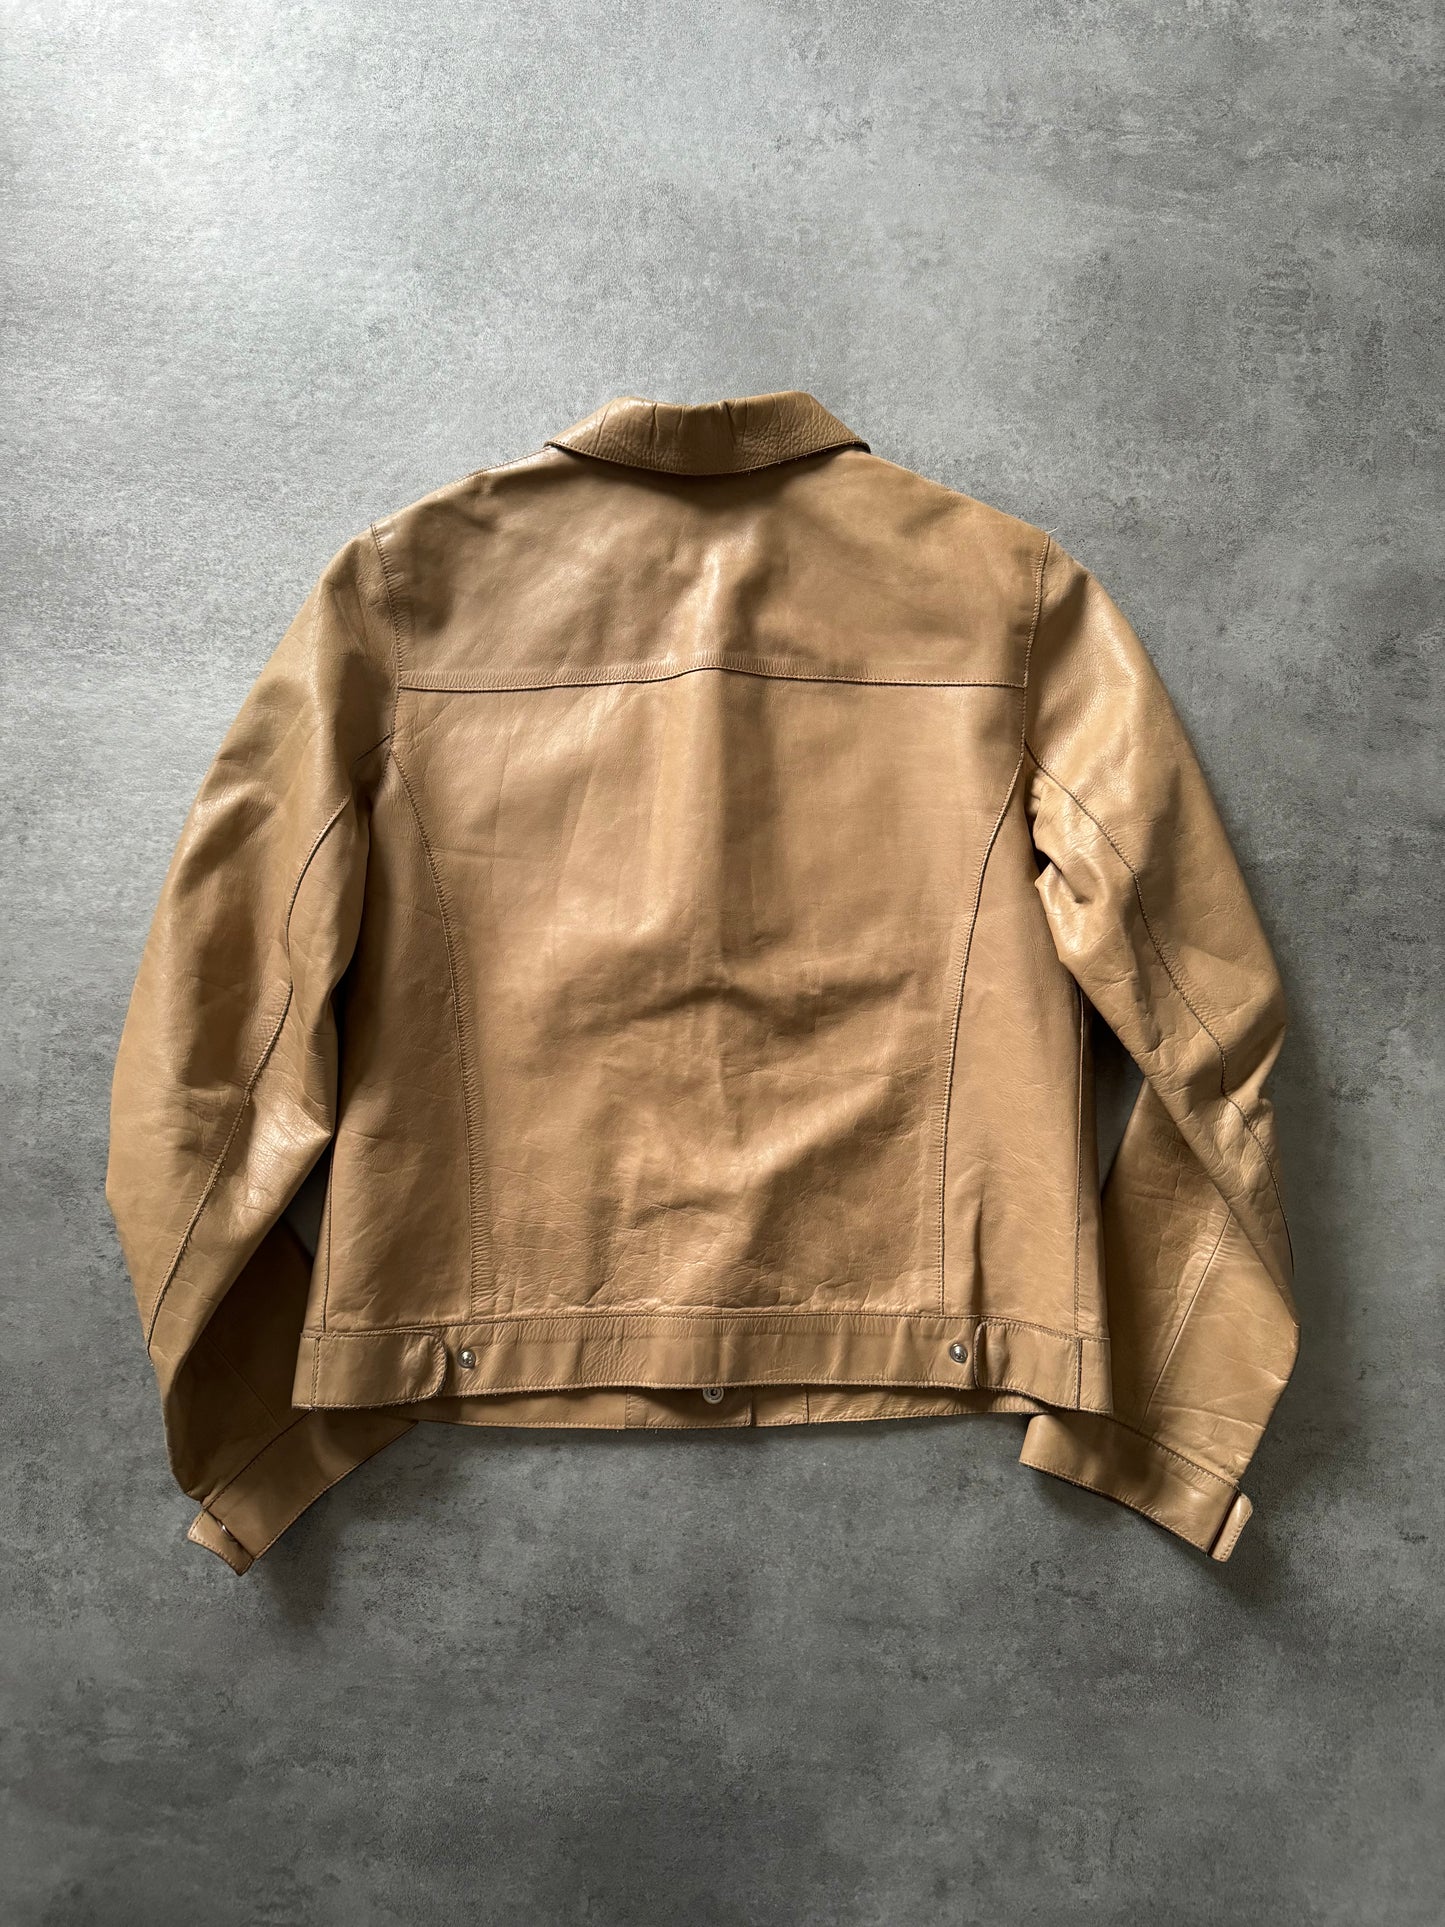 SS1999 Prada Elegant Beige Leather Jacket  (XS) - 7